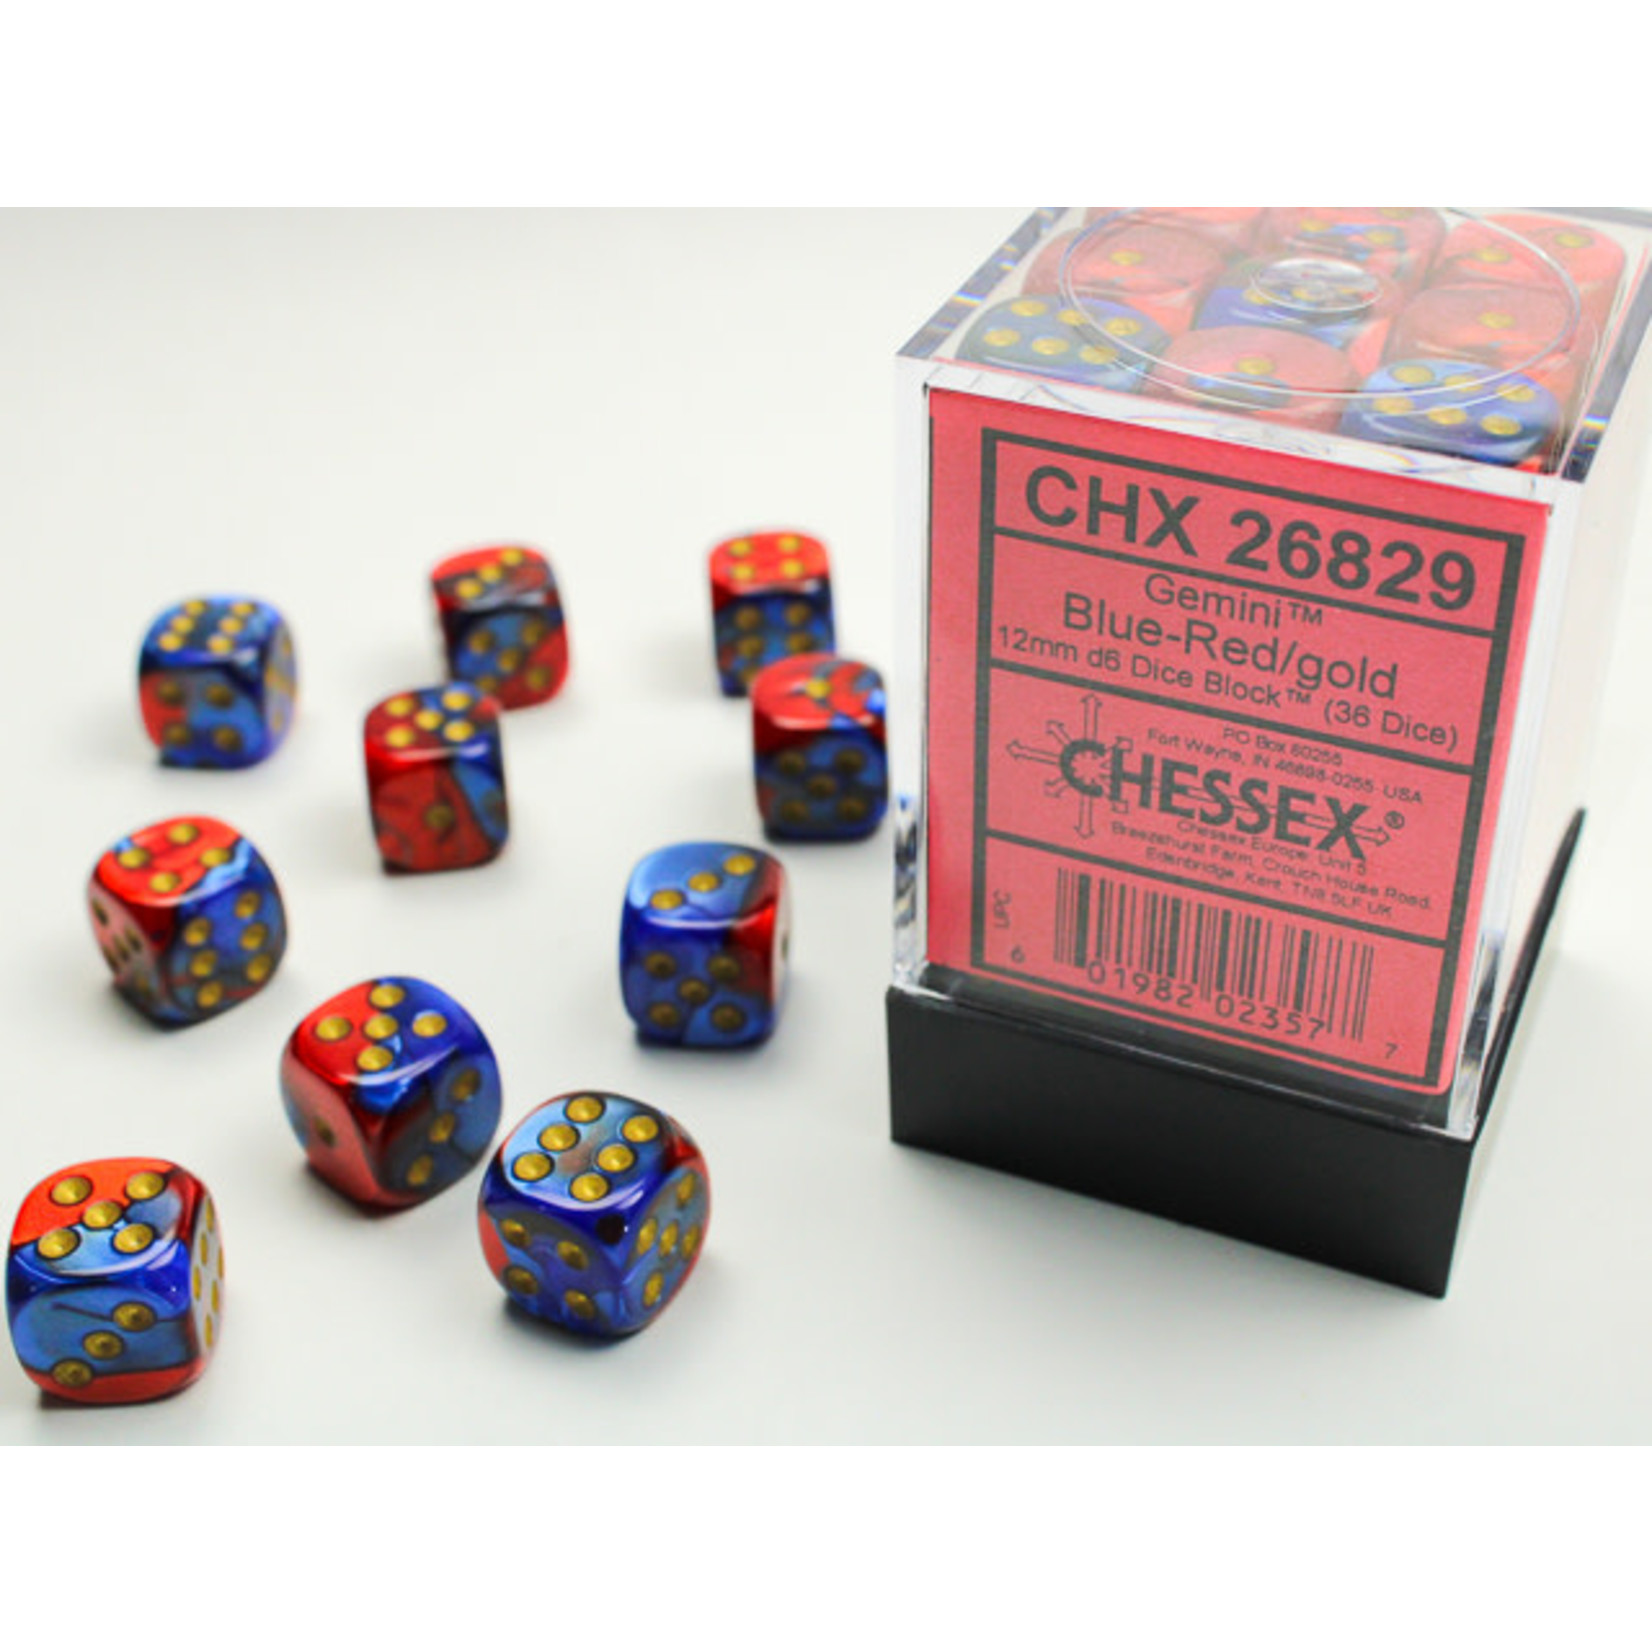 Chessex Dice 12mm 26829 36pc Gemini Blue-Red/Gold